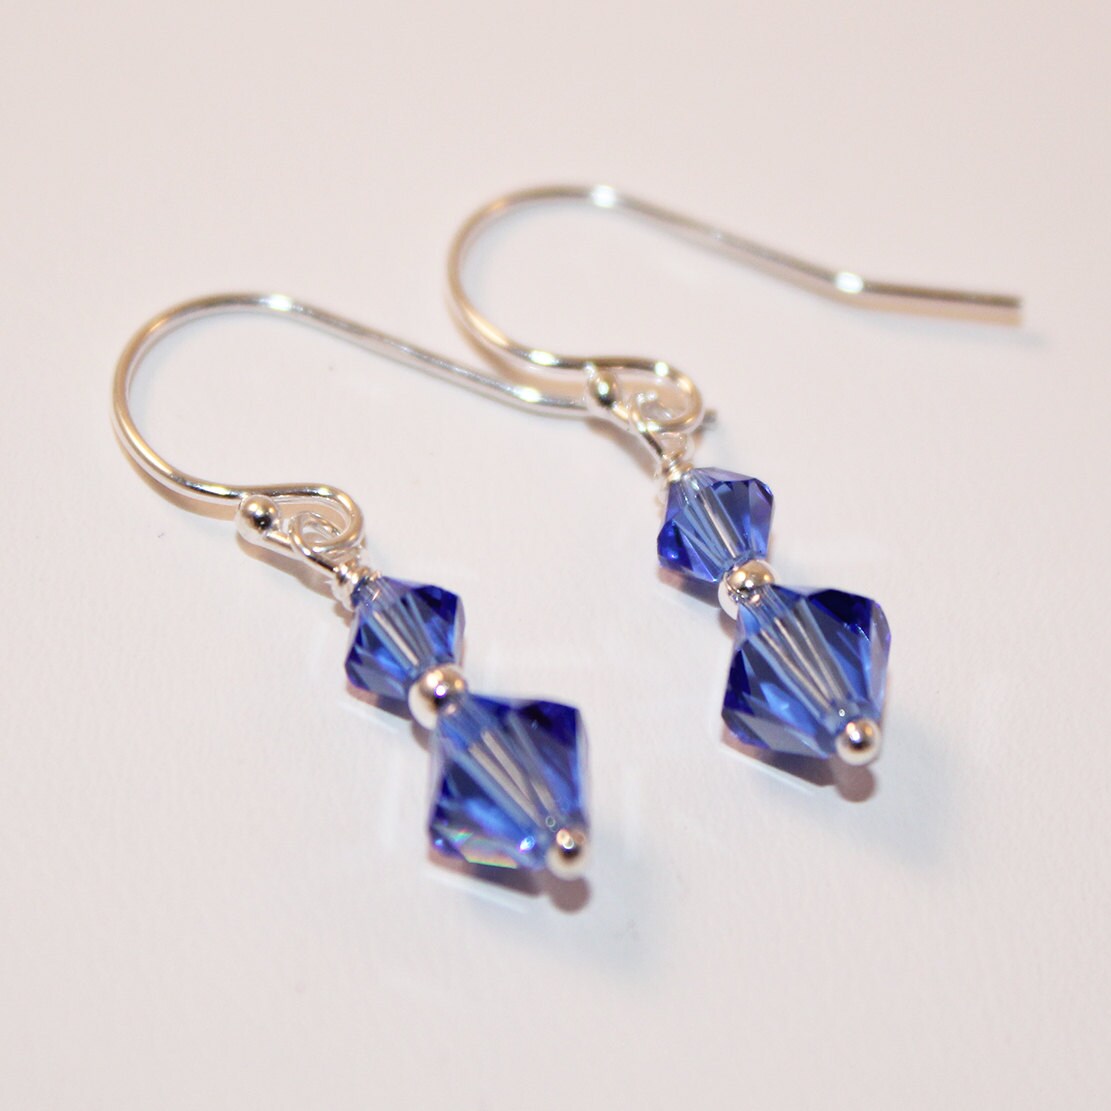 Swarovski Crystal Earrings Sapphire Blue Sterling Silver